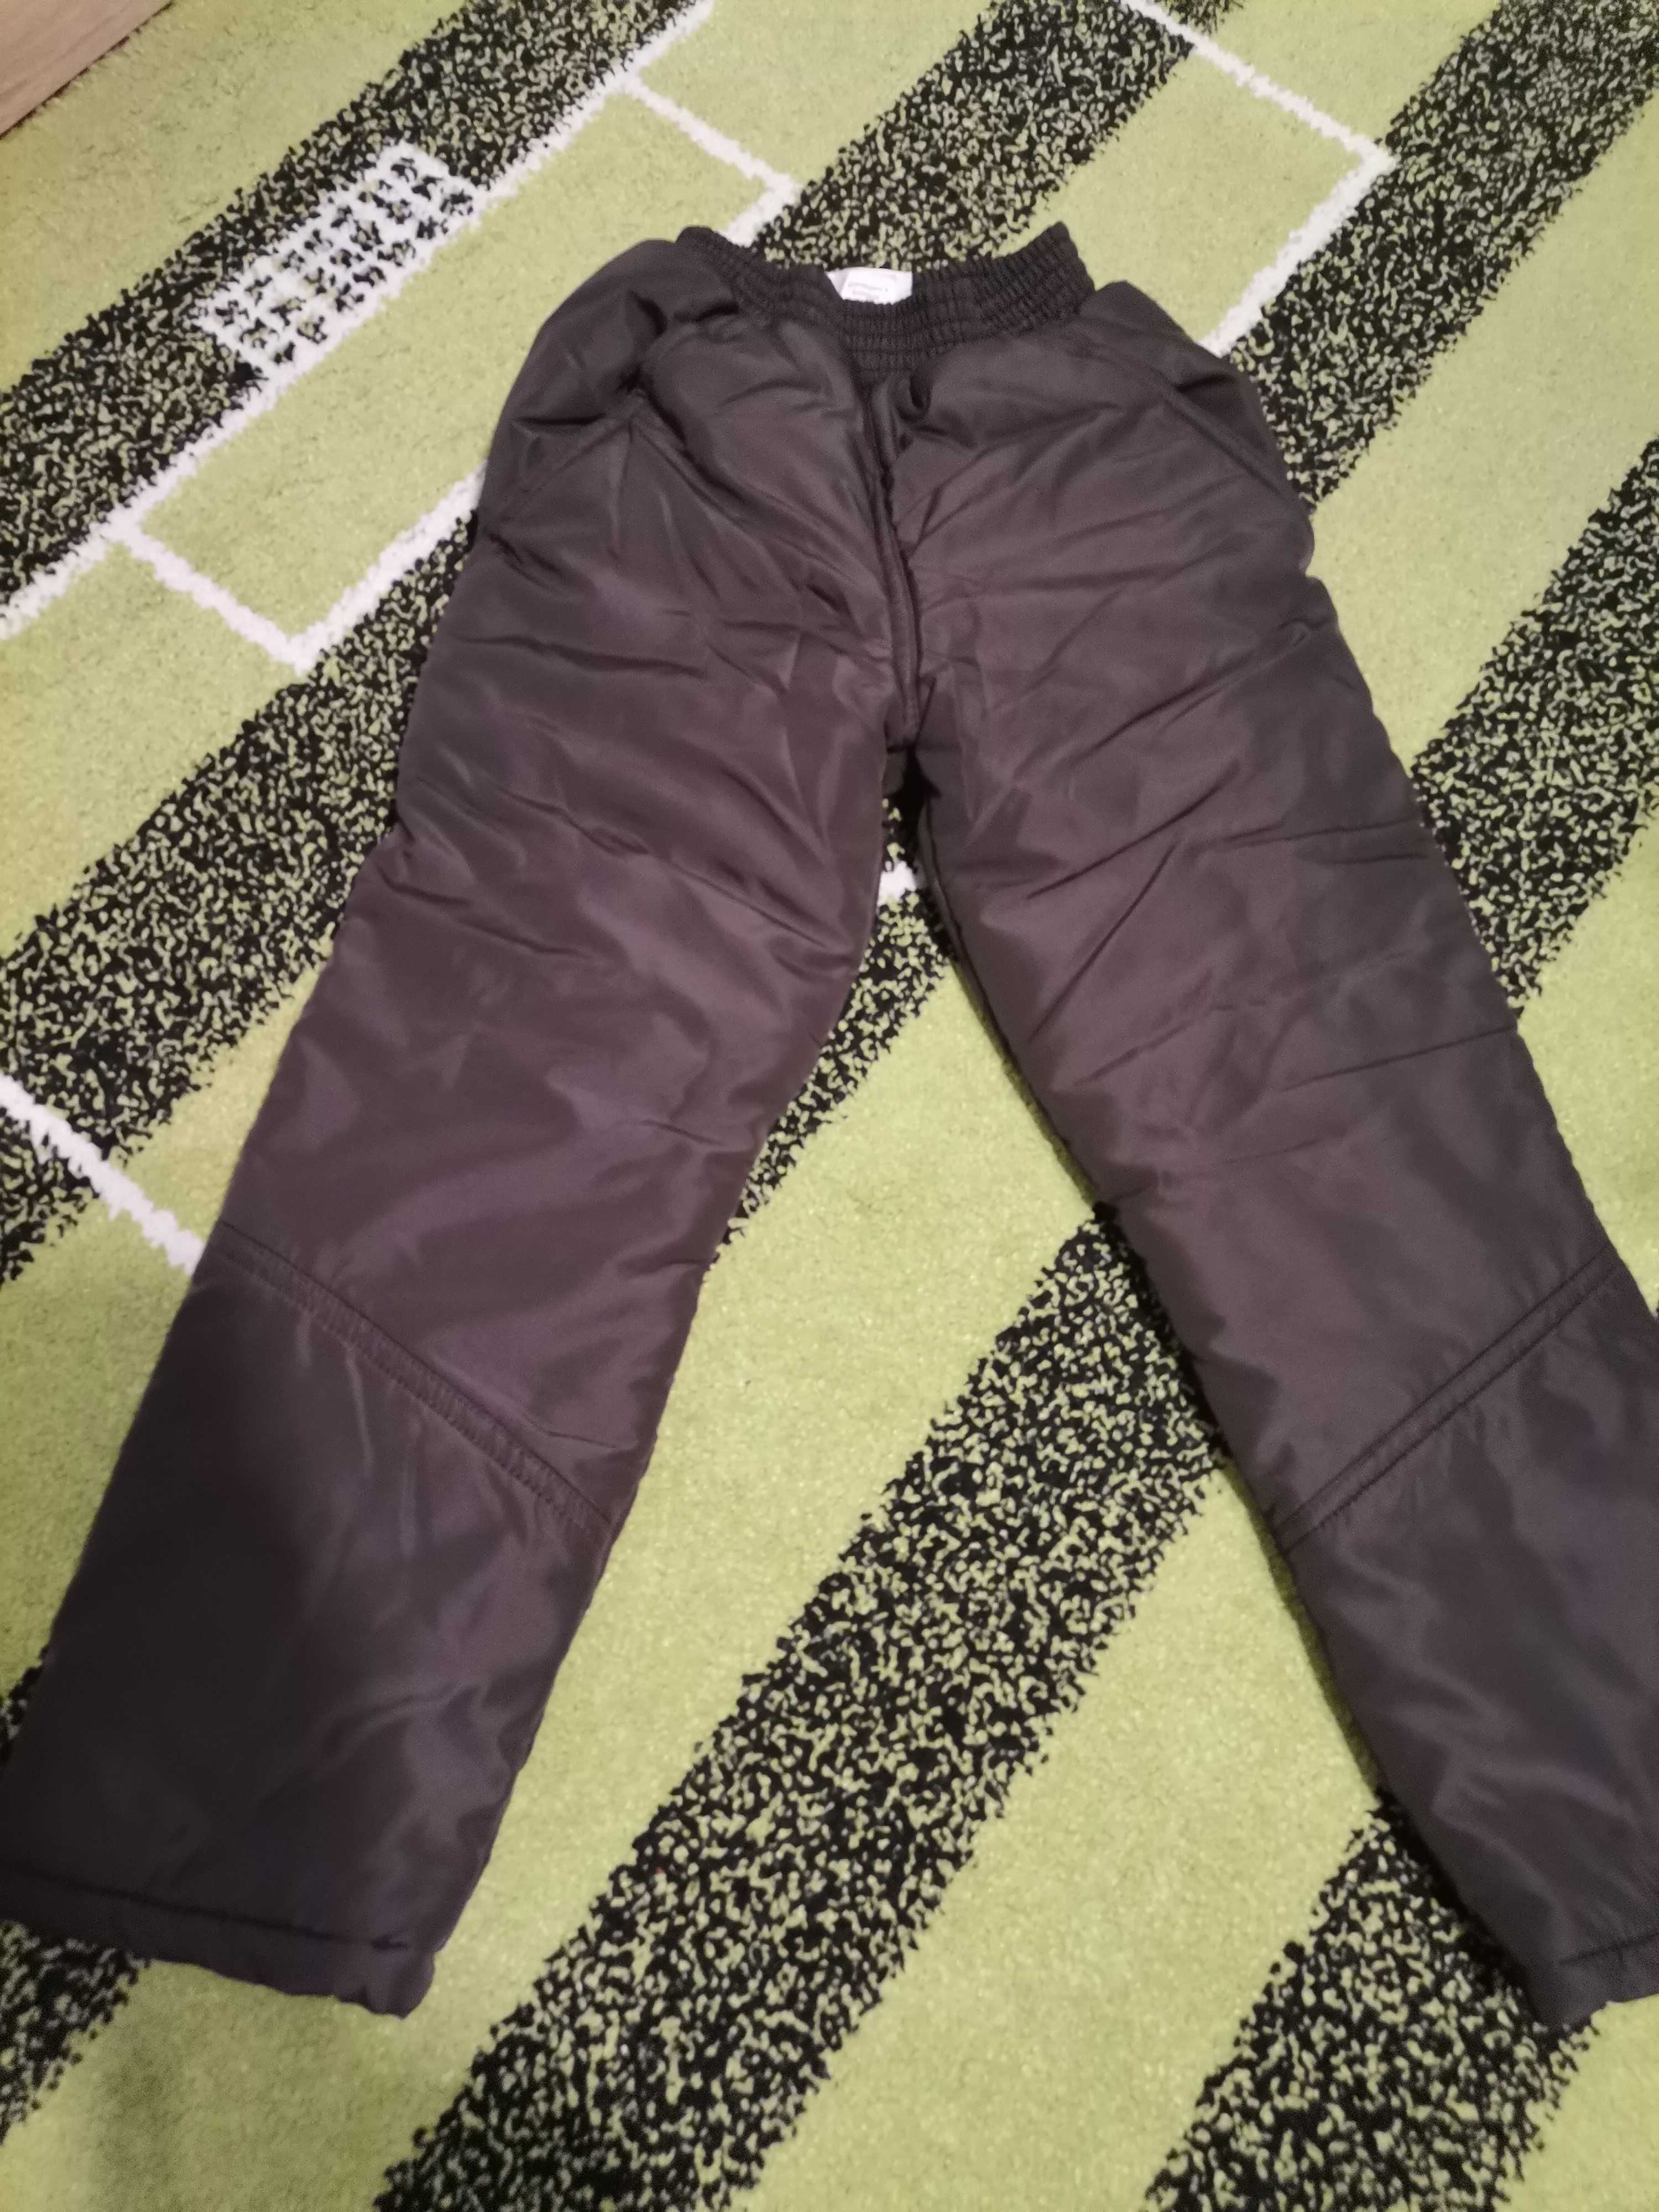 Шушлякови панталони и гащеризон  за момче за сняг 104,110,116 размер